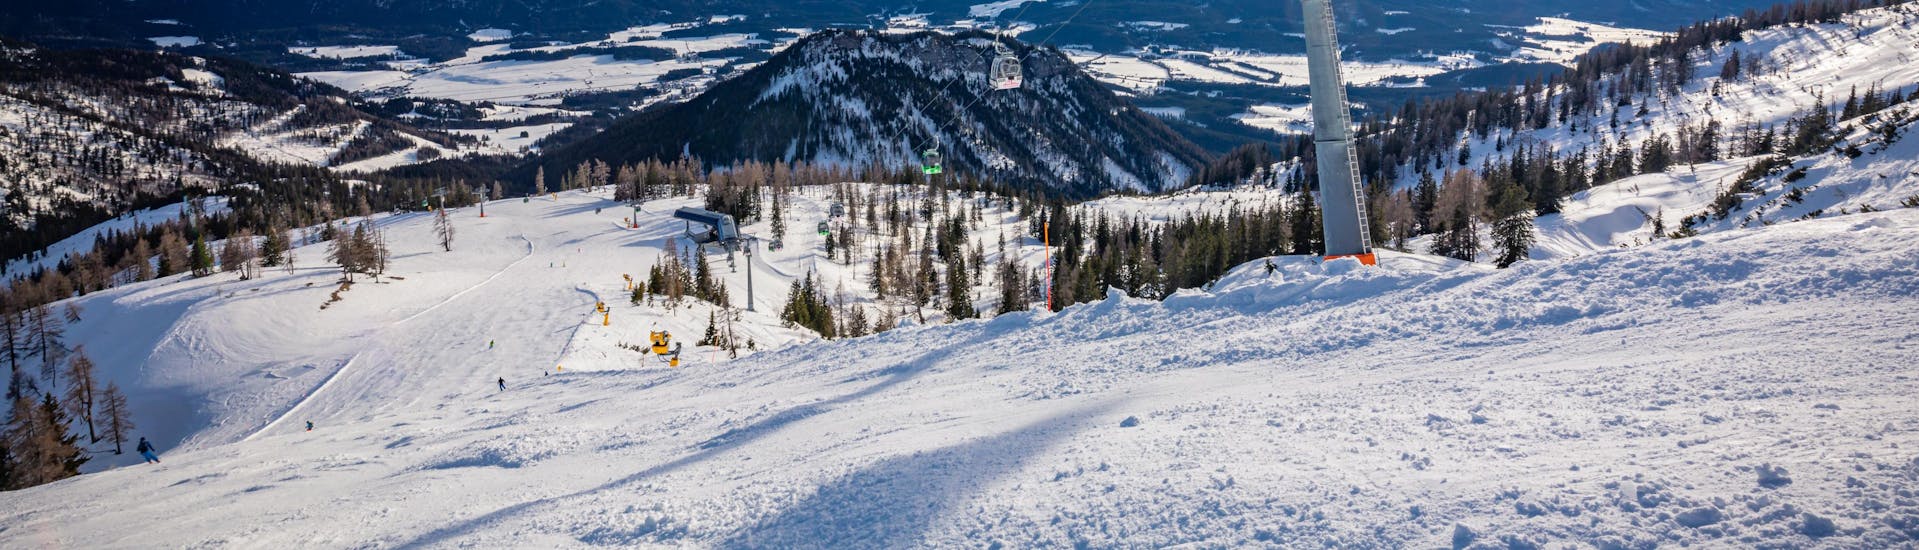 A view of a snowy mountain top in the ski resort of Tauplitz-Bad Mitterndorf, where ski schools gather to start their ski lessons.